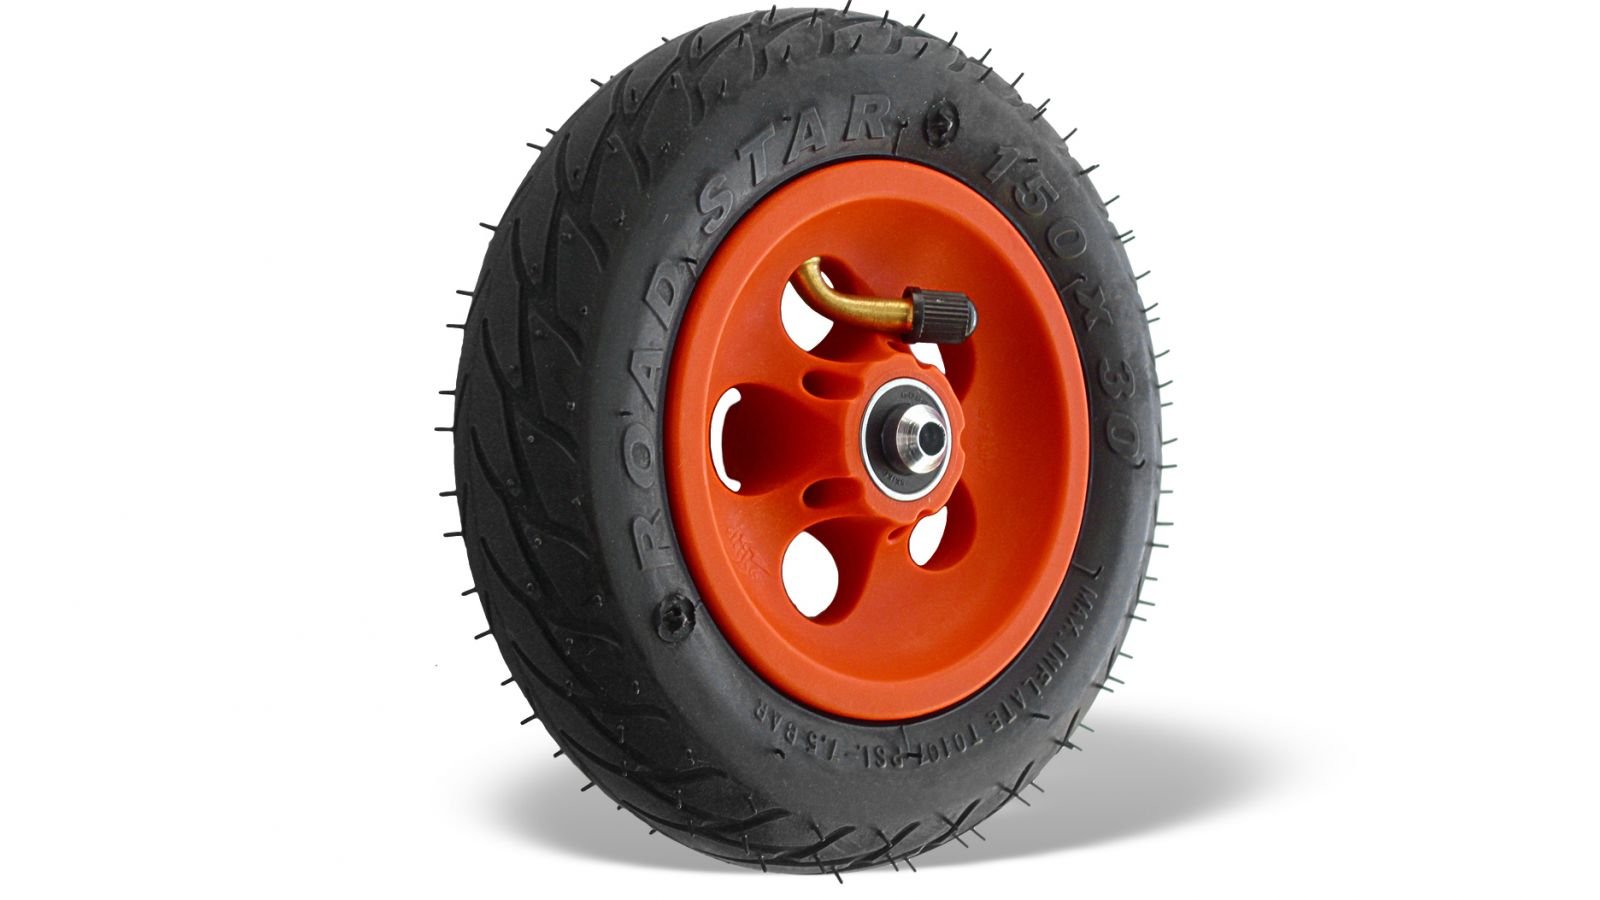 Wheel Orange 150mm/6 inch Orange with Classic Rim - Roll and Pole